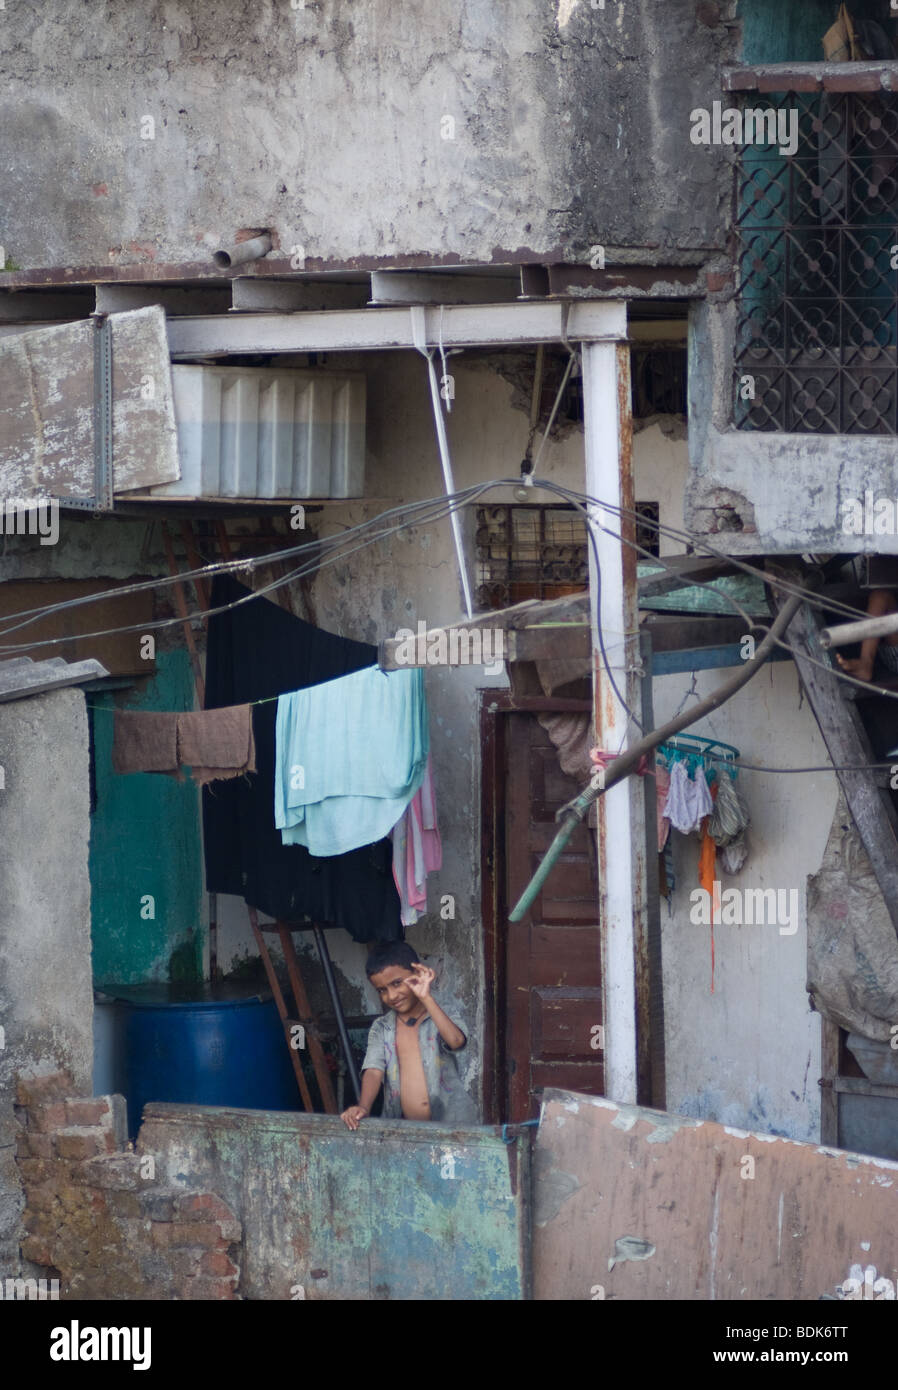 a child from the mumbai slums , Stock Photo